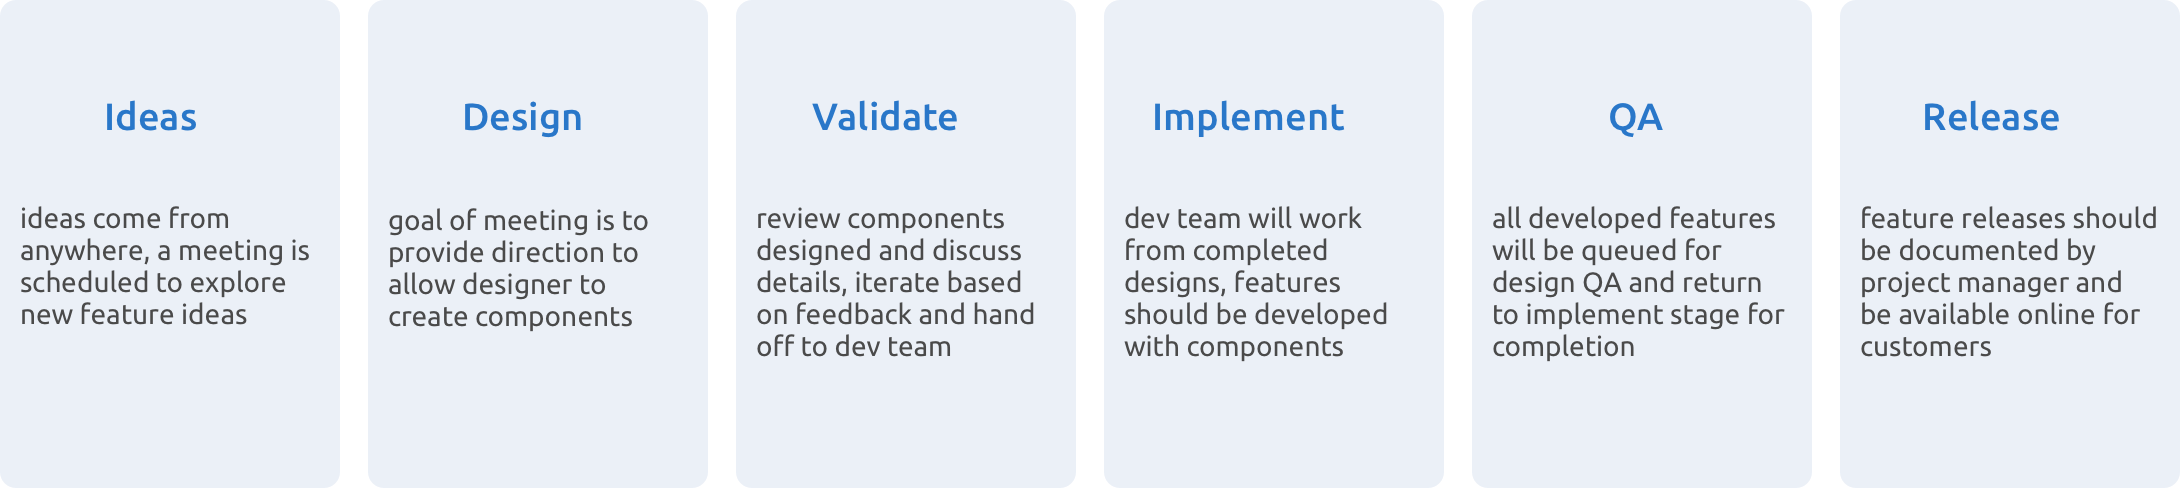 development processes